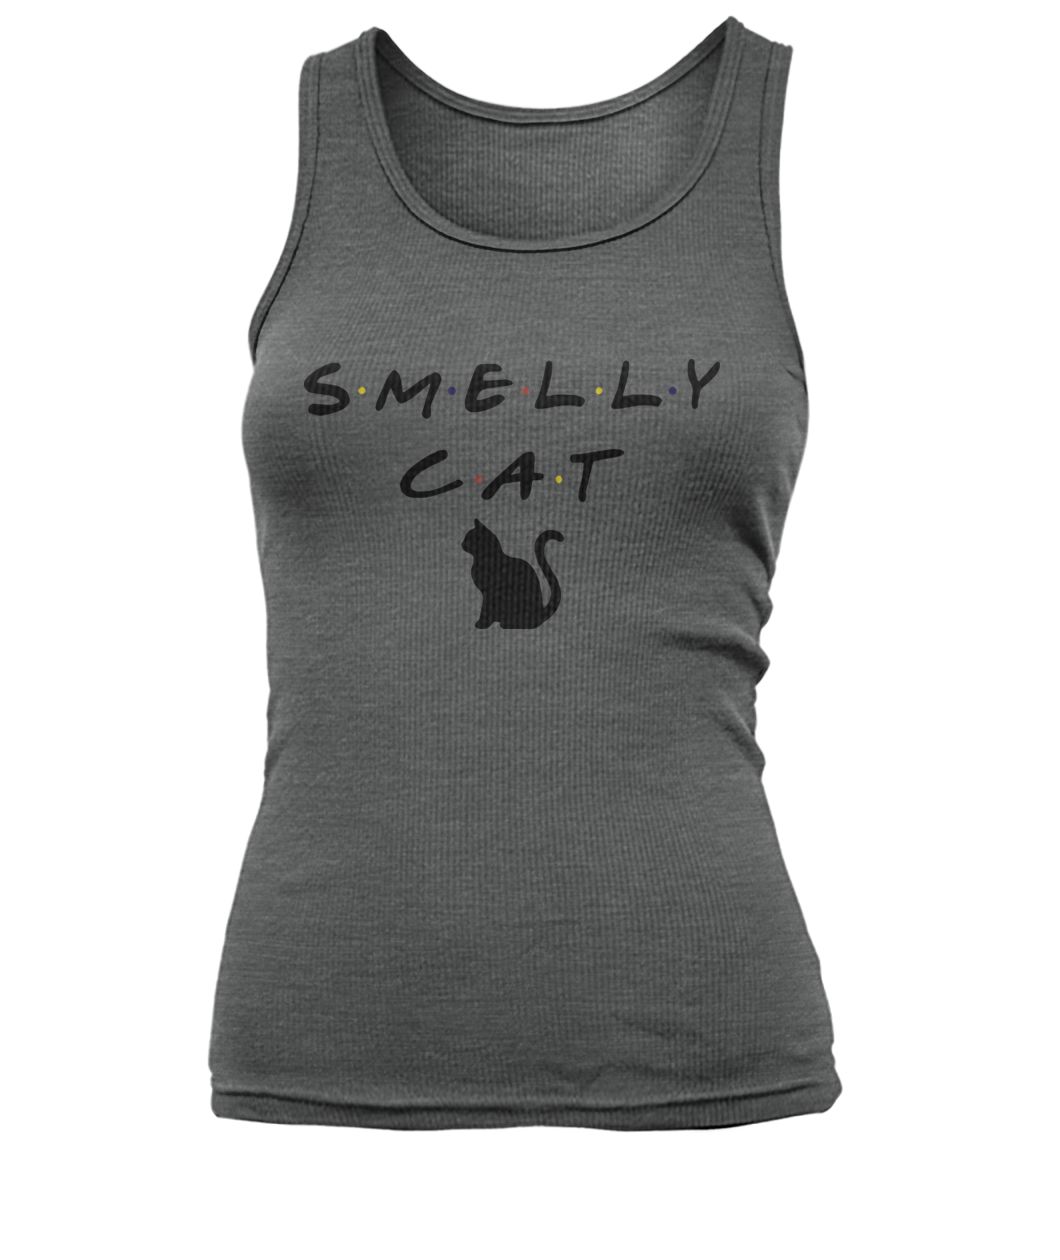 Friends show smelly cat women's tank top